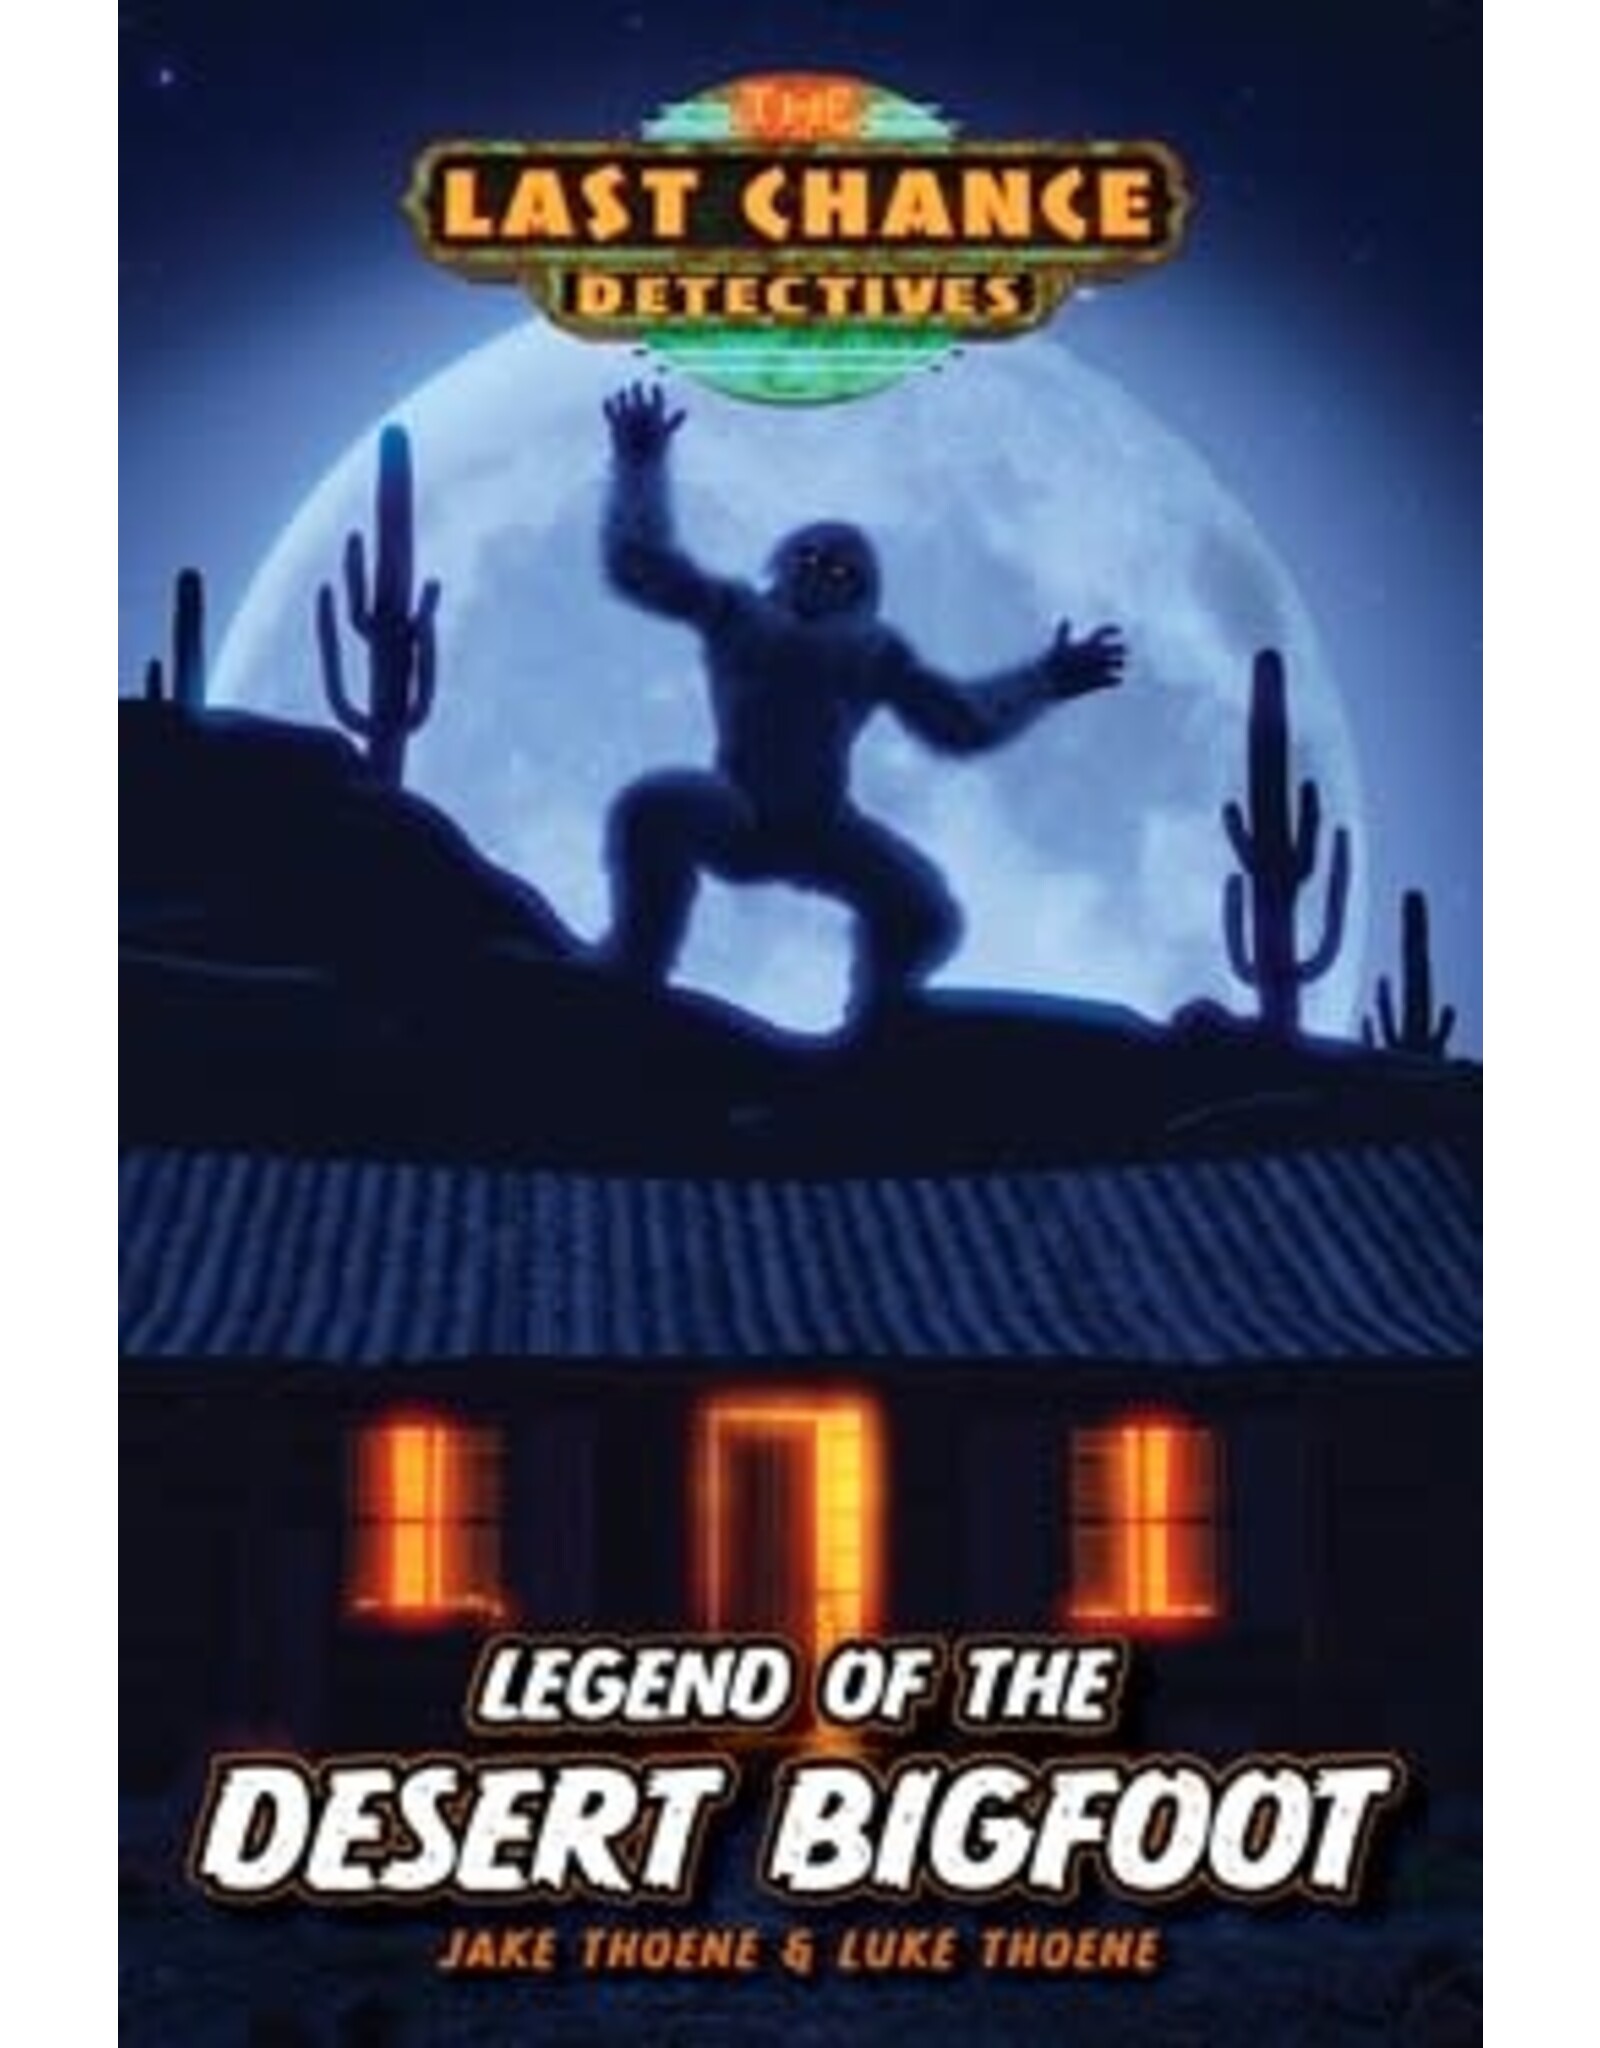 Jake Thoene & Luke Thoene Legend of the Desert Bigfoot - Last Chance Detectives Book 3